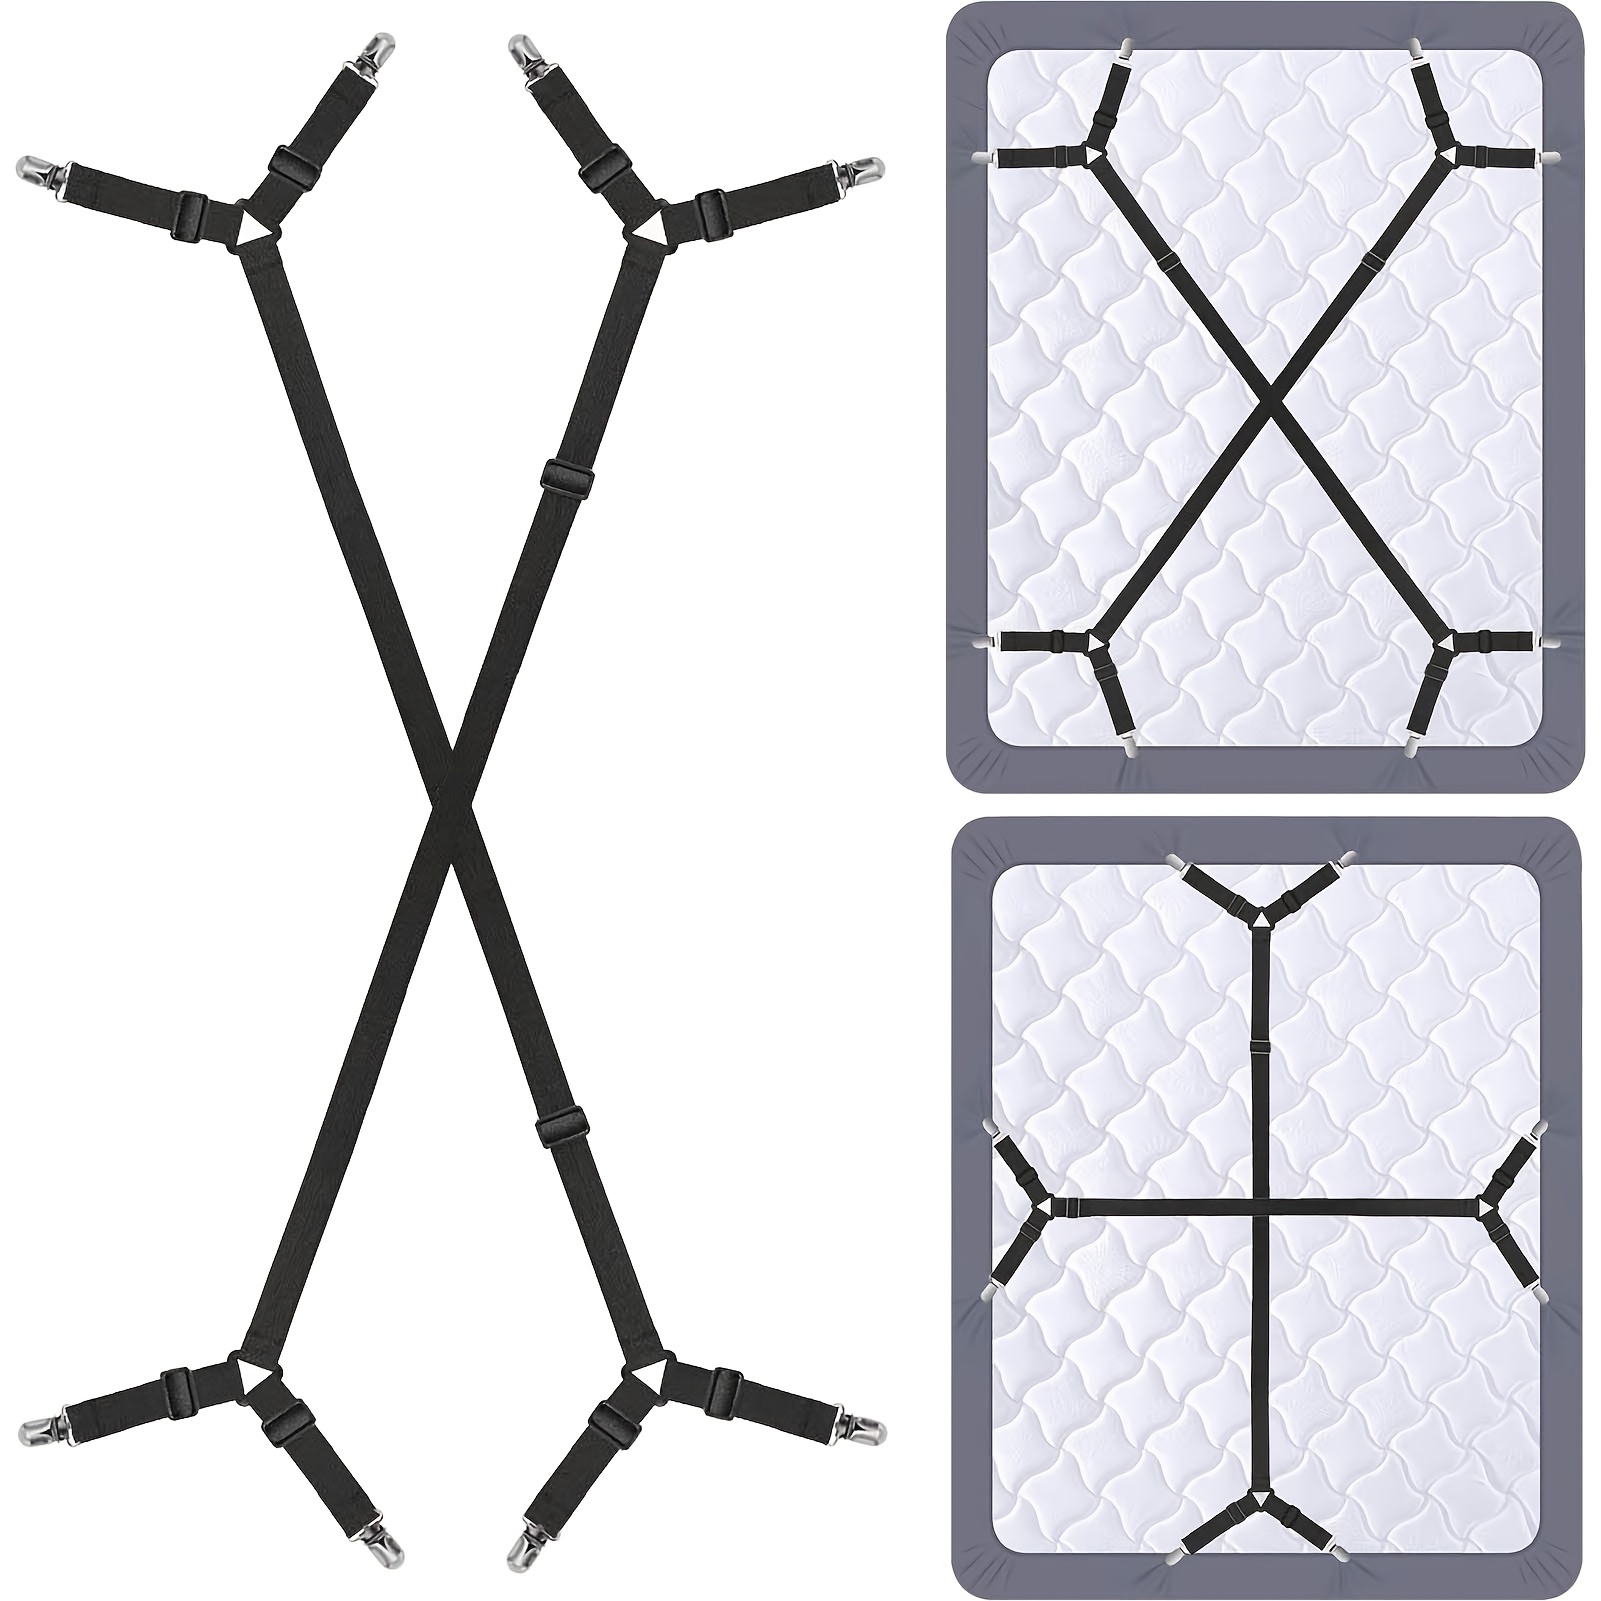 Adjustable Bed Sheet Holders Clips - 8pcs Sheet Straps Suspenders